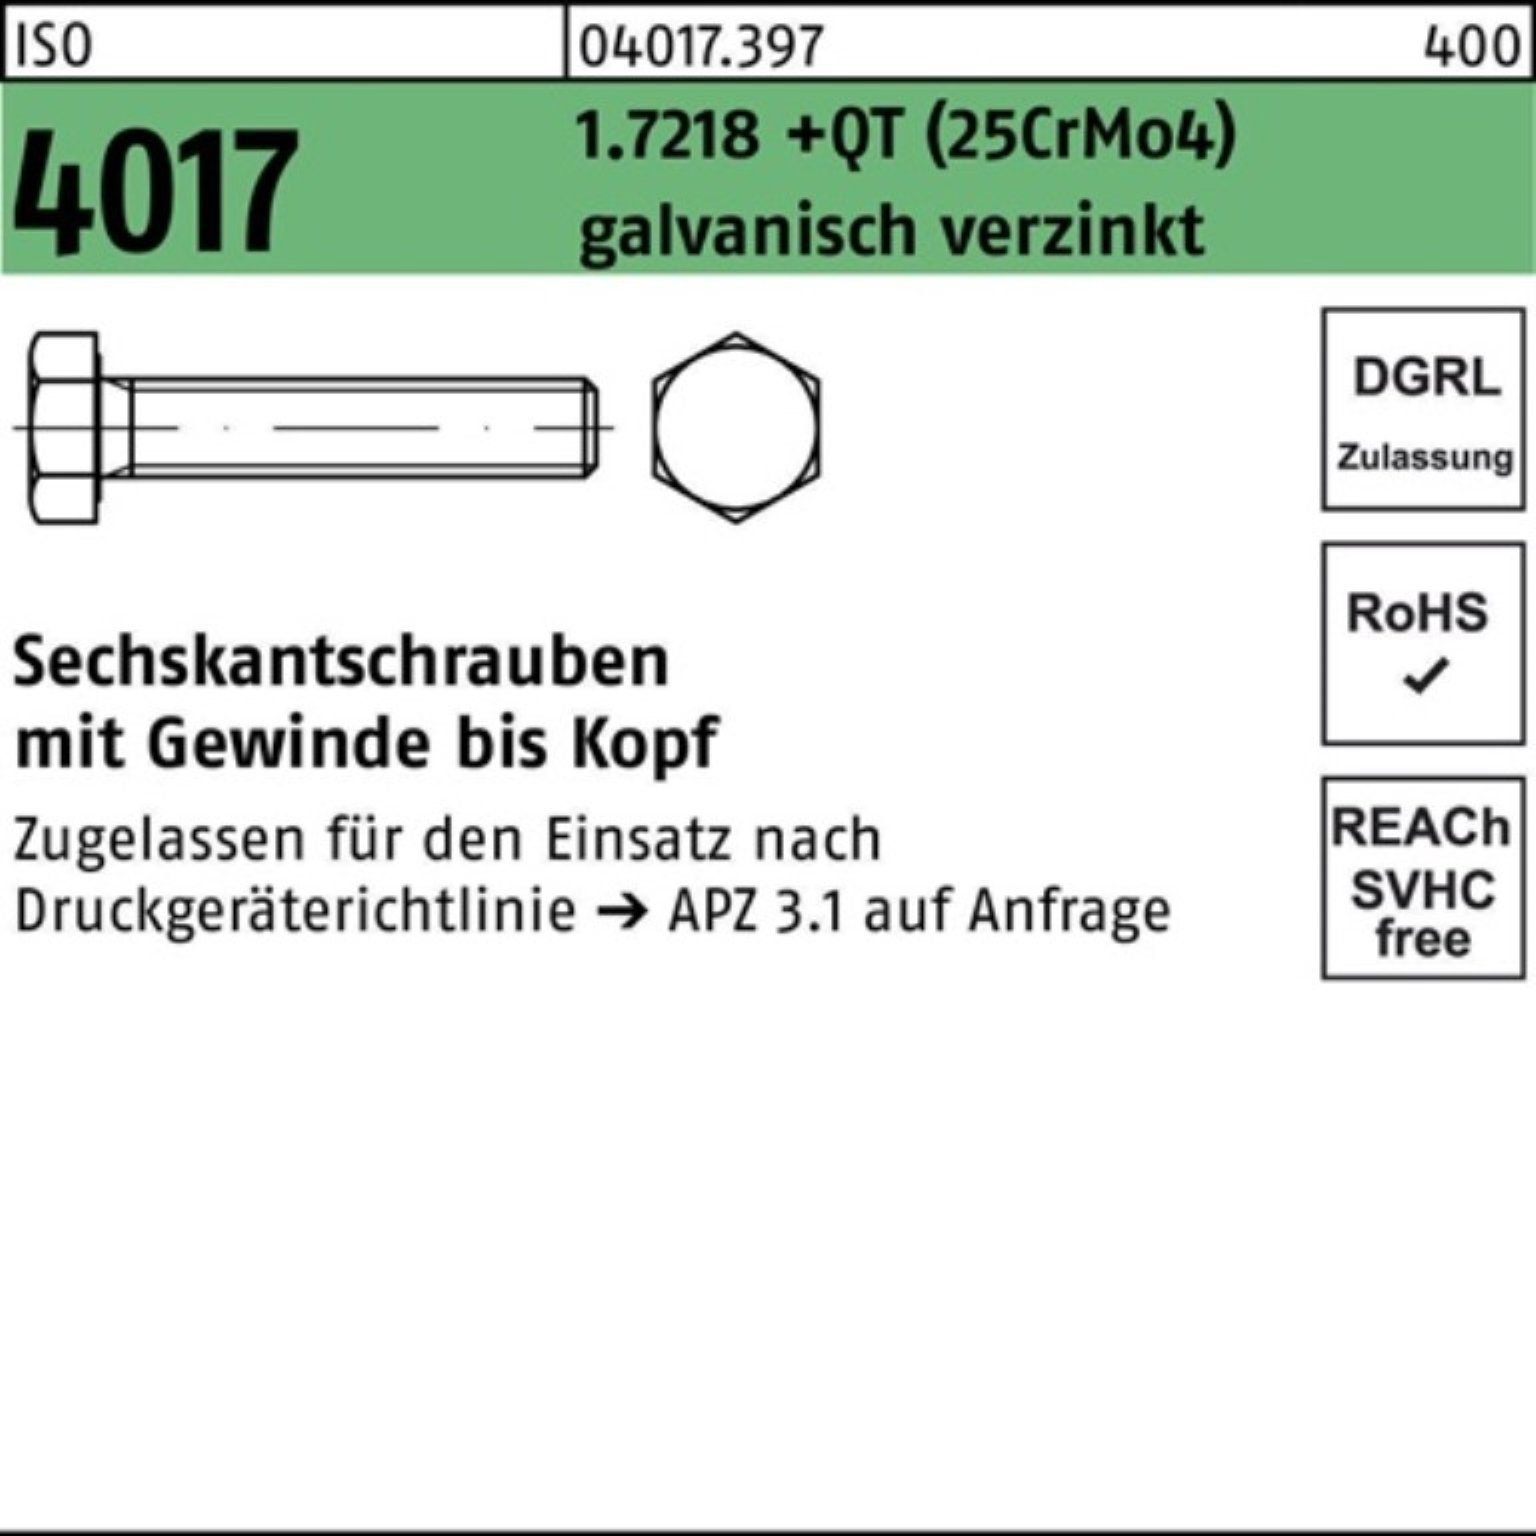 +QT 4017 Sechskantschraube M30x65 100er 1.7218 ISO Pack Sechskantschraube g Bufab (25CrMo4) VG